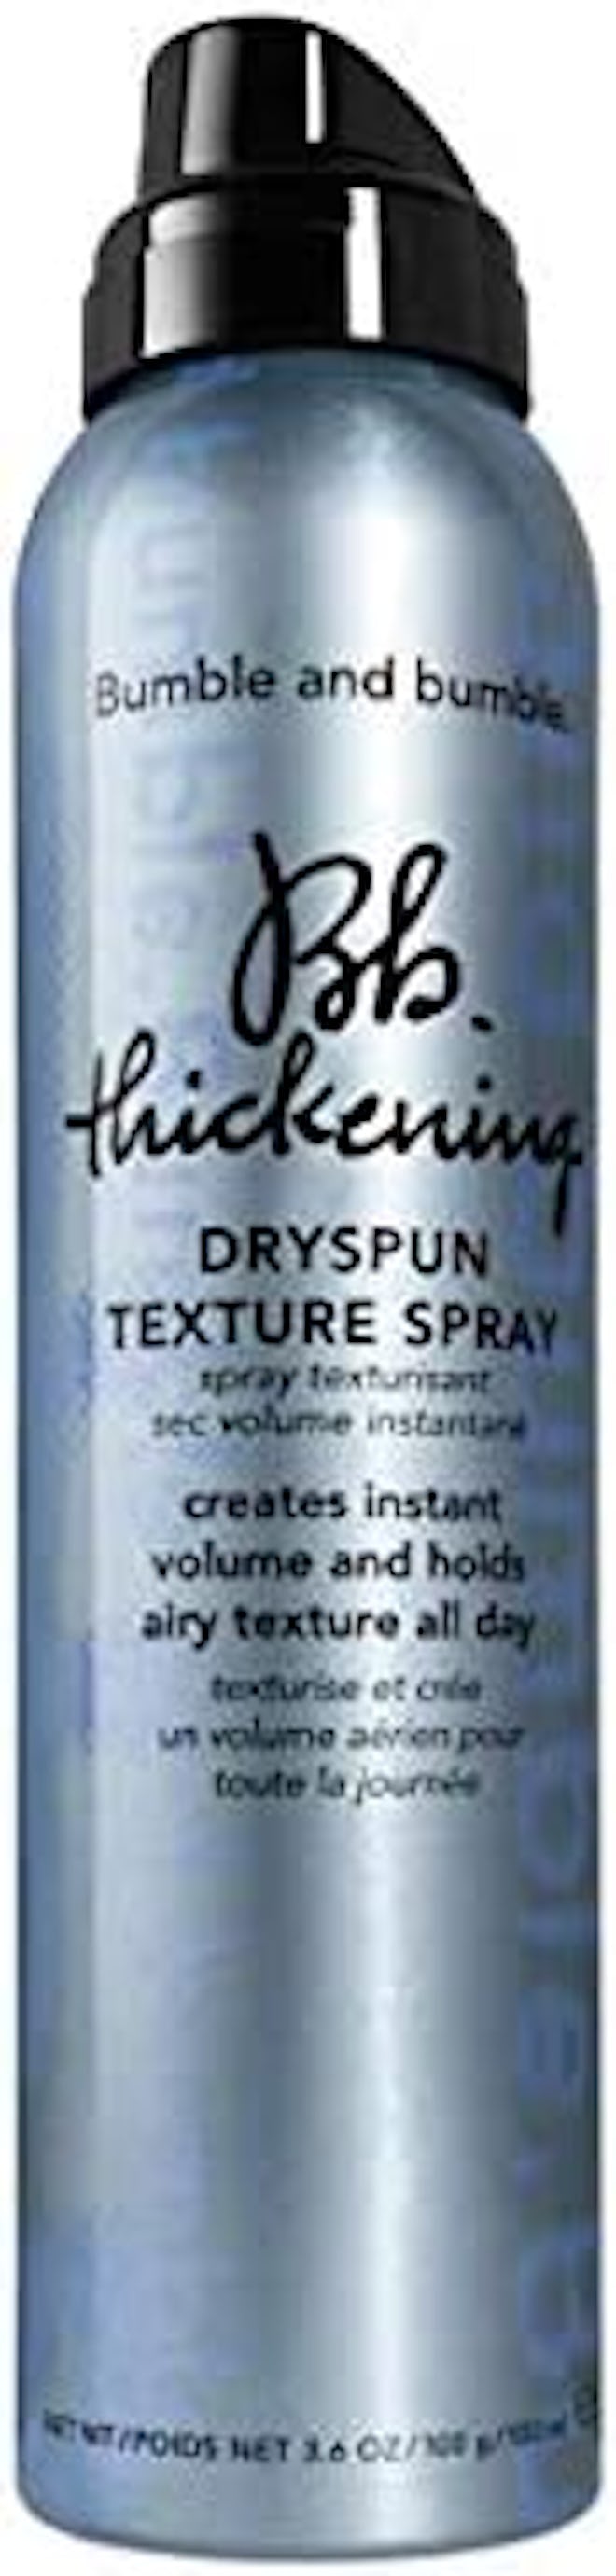 Bumble And Bumble Thickening Dryspun Volume Texture Spray